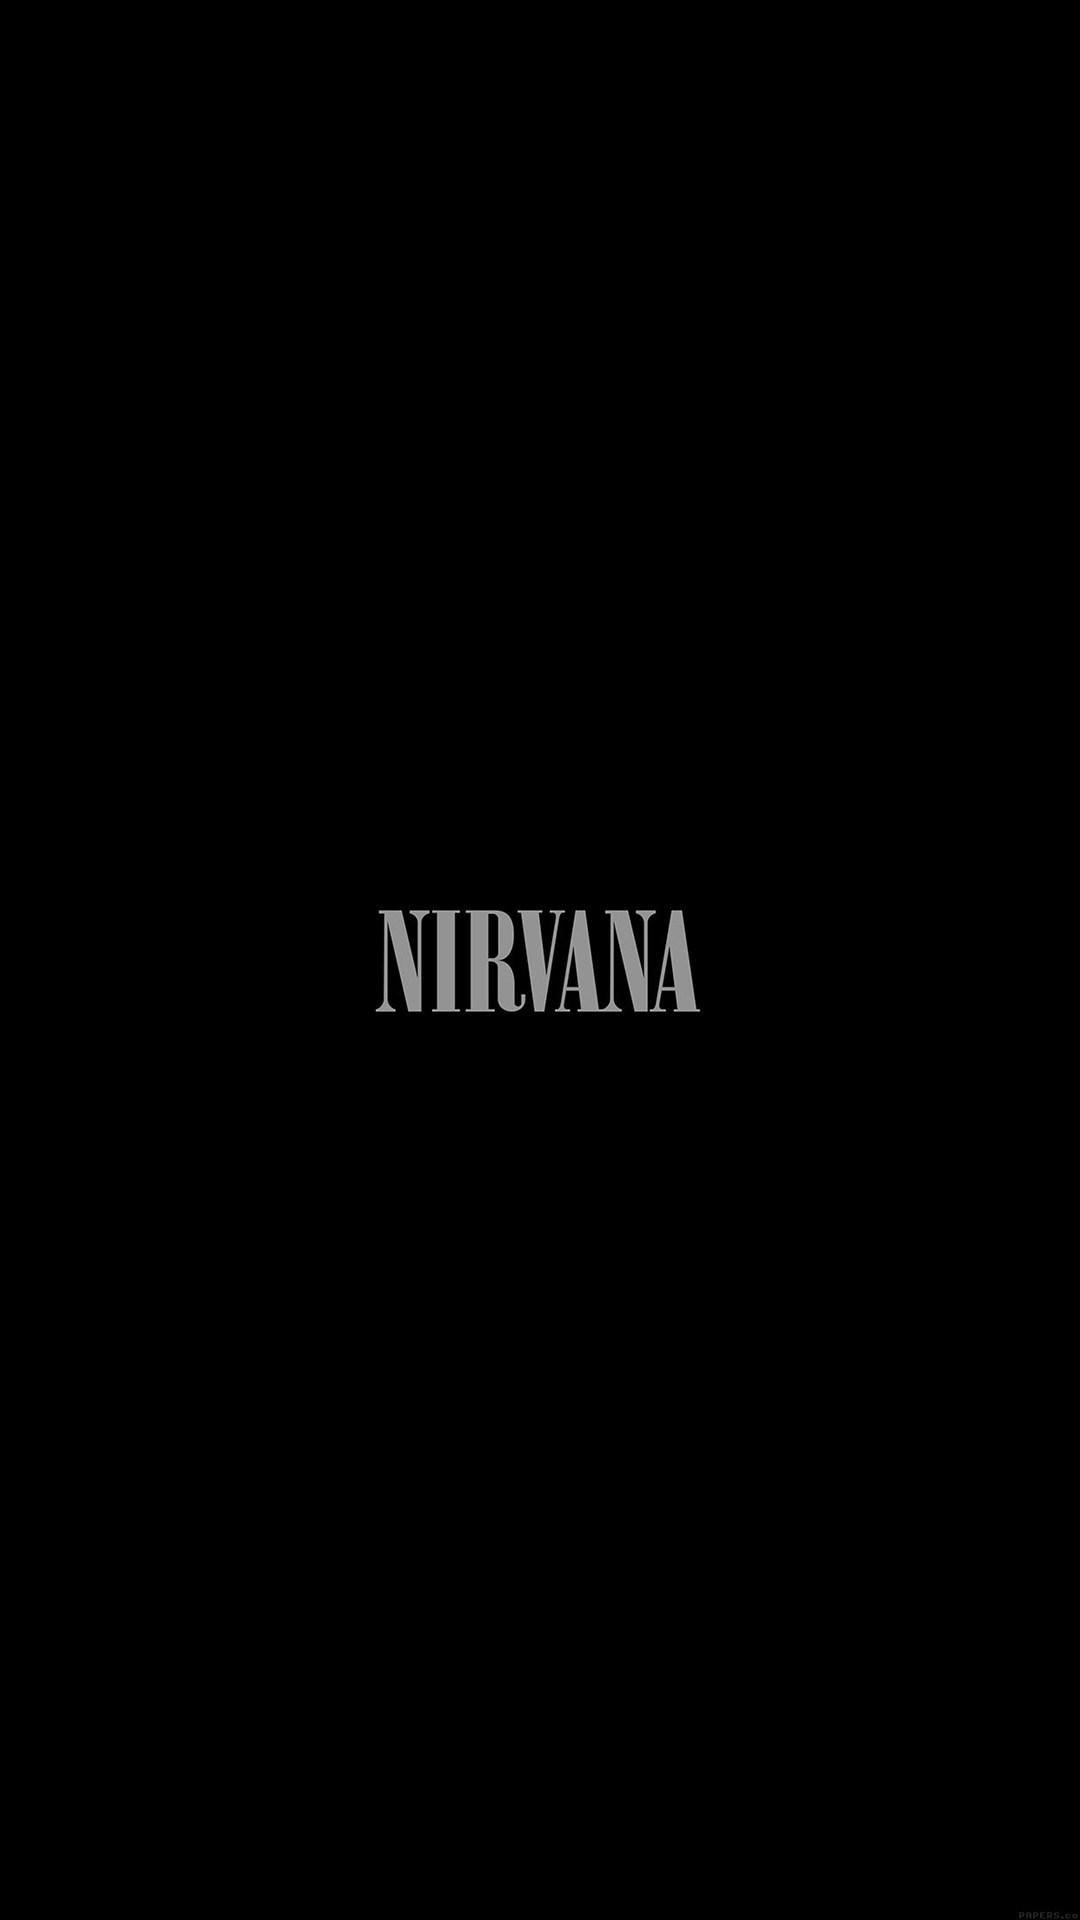 Nirvana dark logo iPhone 8 Wallpaper Free Download